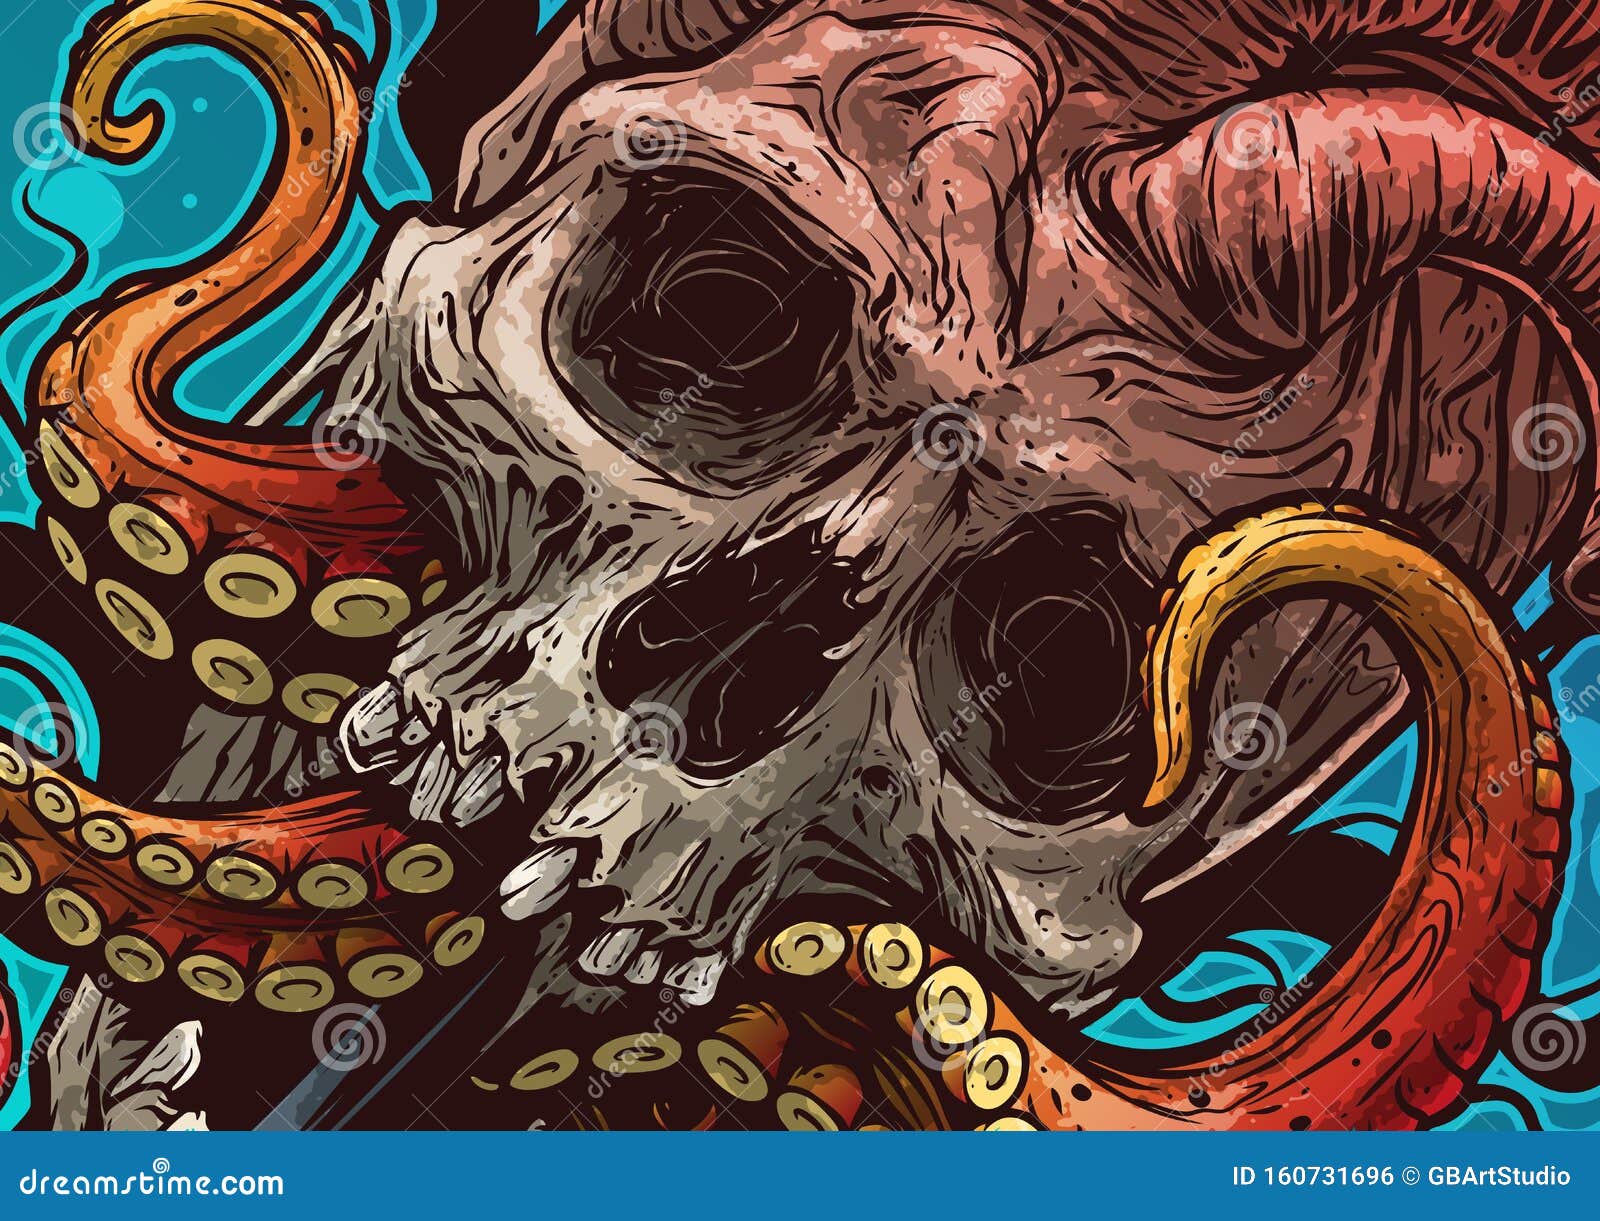 Skull Octopus by Eddie Zavala TattooNOW